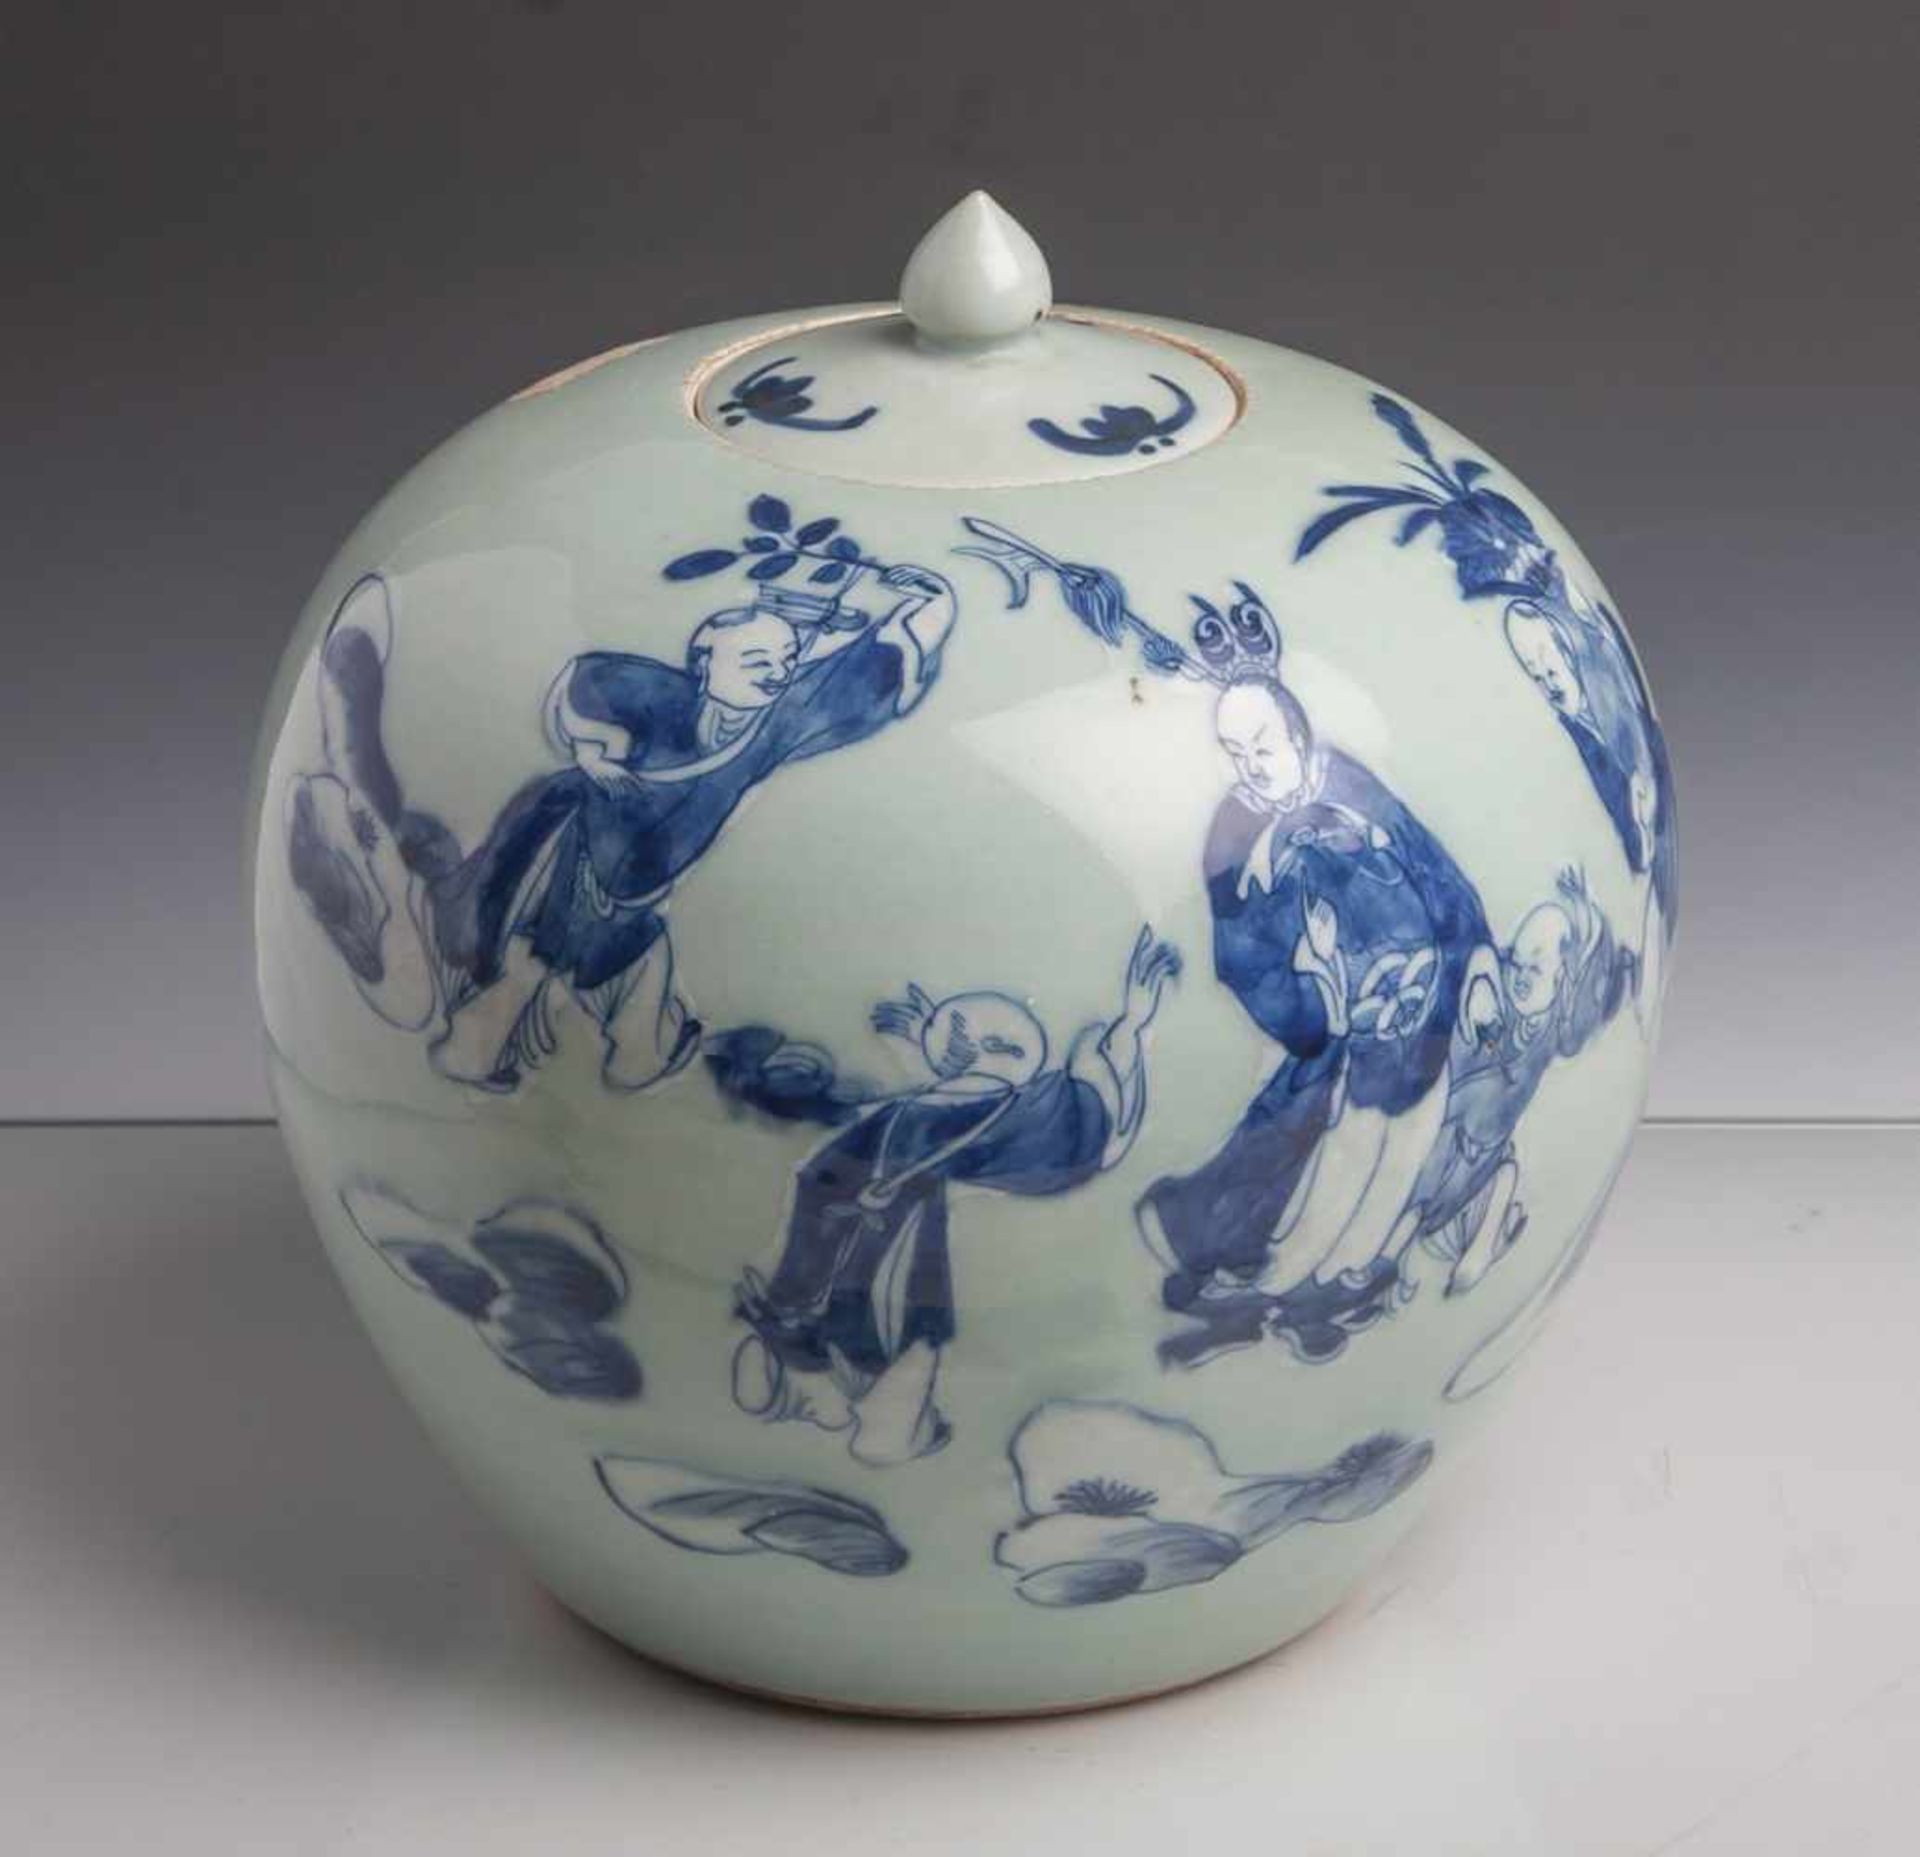 Ingwertopf (wohl 18. Jahrhundert, China), Porzellan, Motiv spielende Knaben, blau u. weißbemalt,